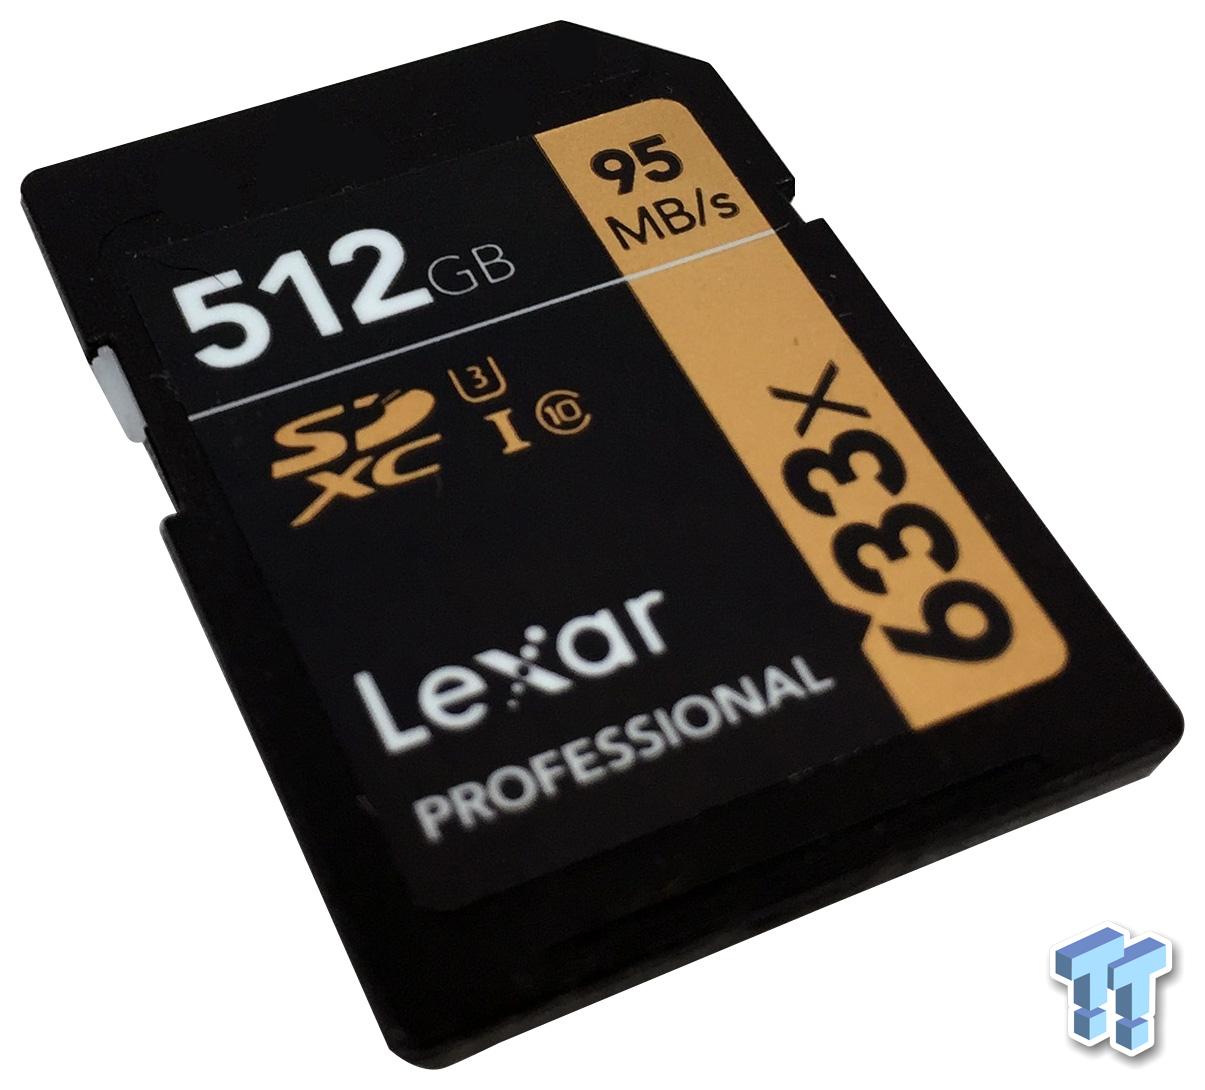 Lexar Professional 512GB SDXC UHS-I Memory Card Review